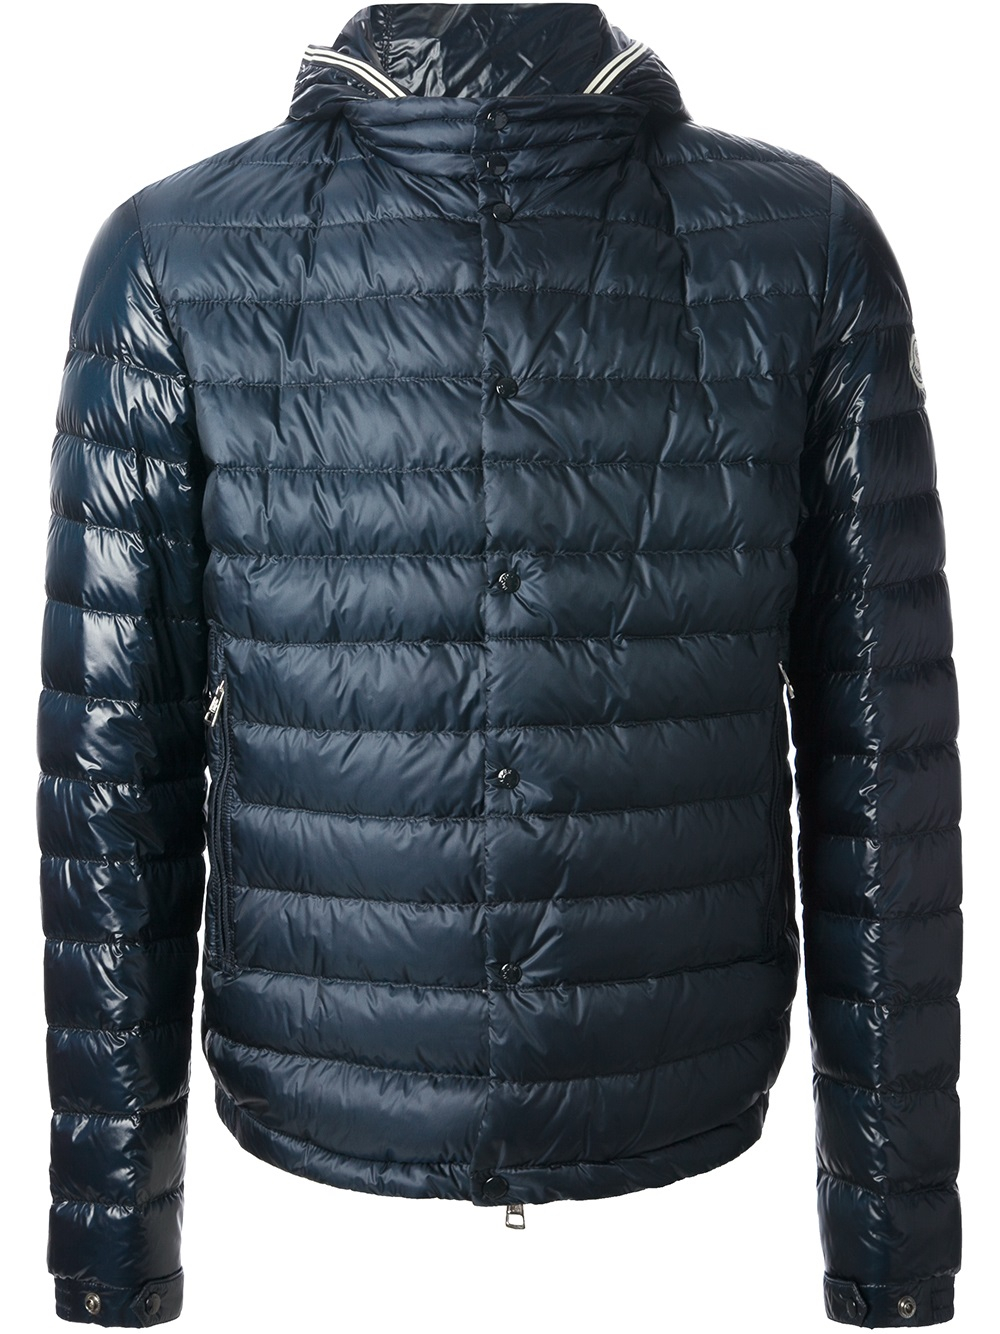 Moncler Anthony Padded Jacket in Blue for Men - Lyst